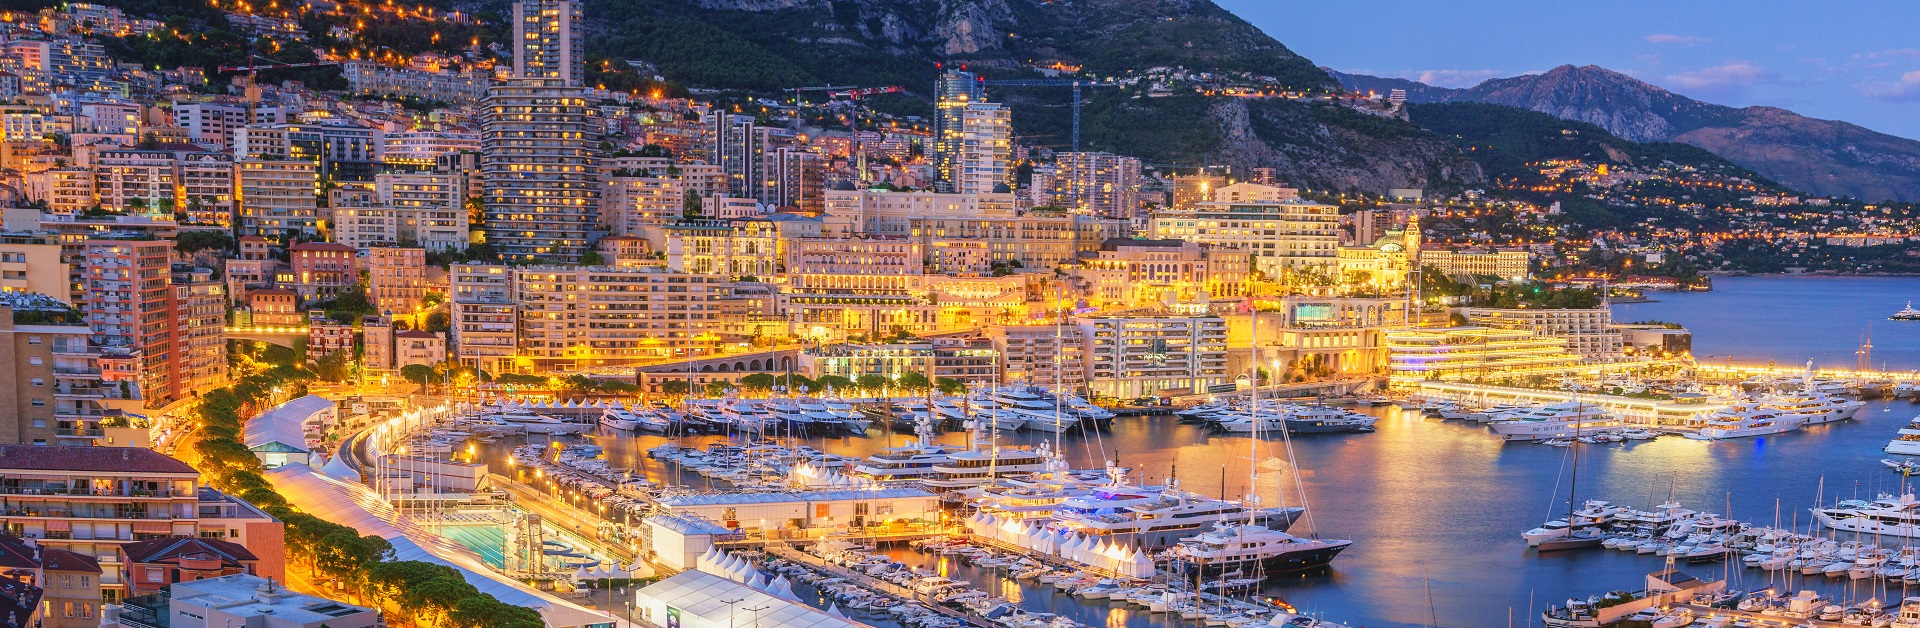 Fund Forum 2021 - Monaco